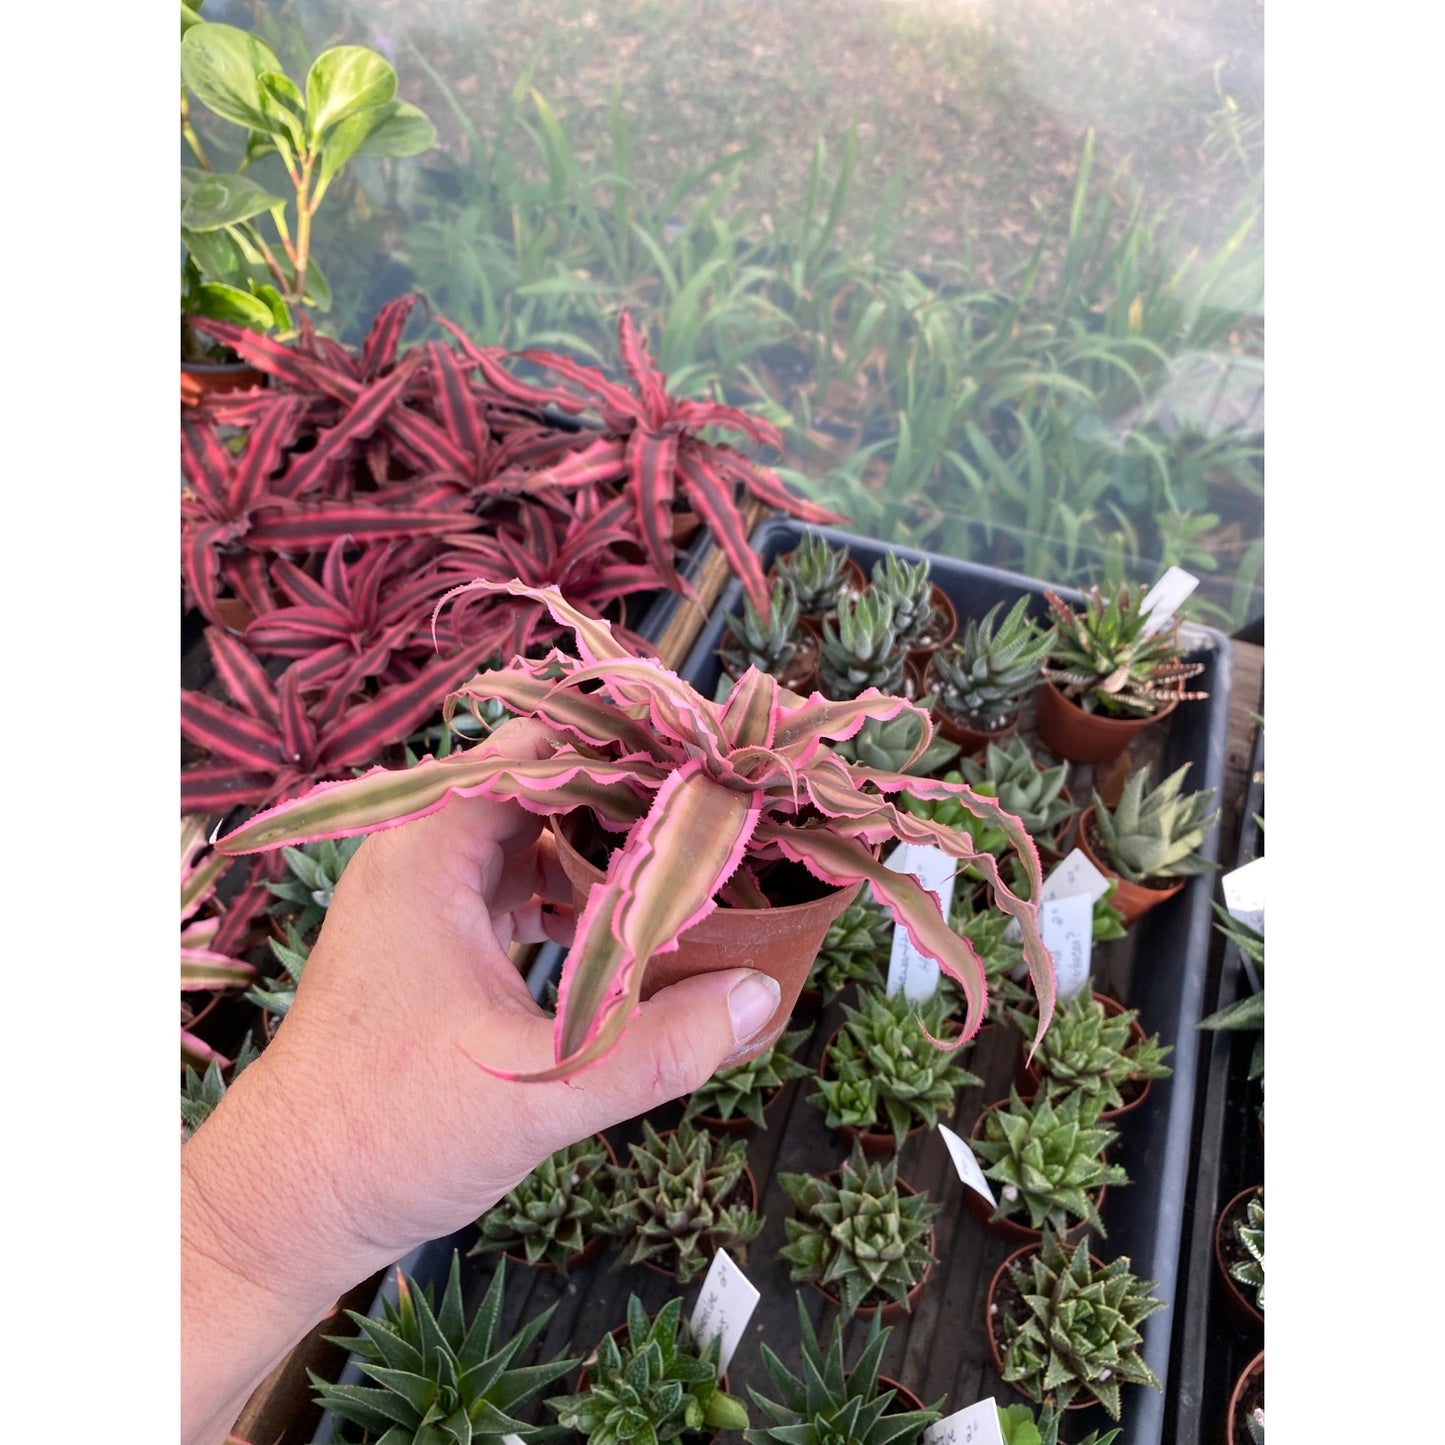 Earth Star Bromeliad or Cryptanthus Bivittatus Pink Starlite 3" Pot Live Plant